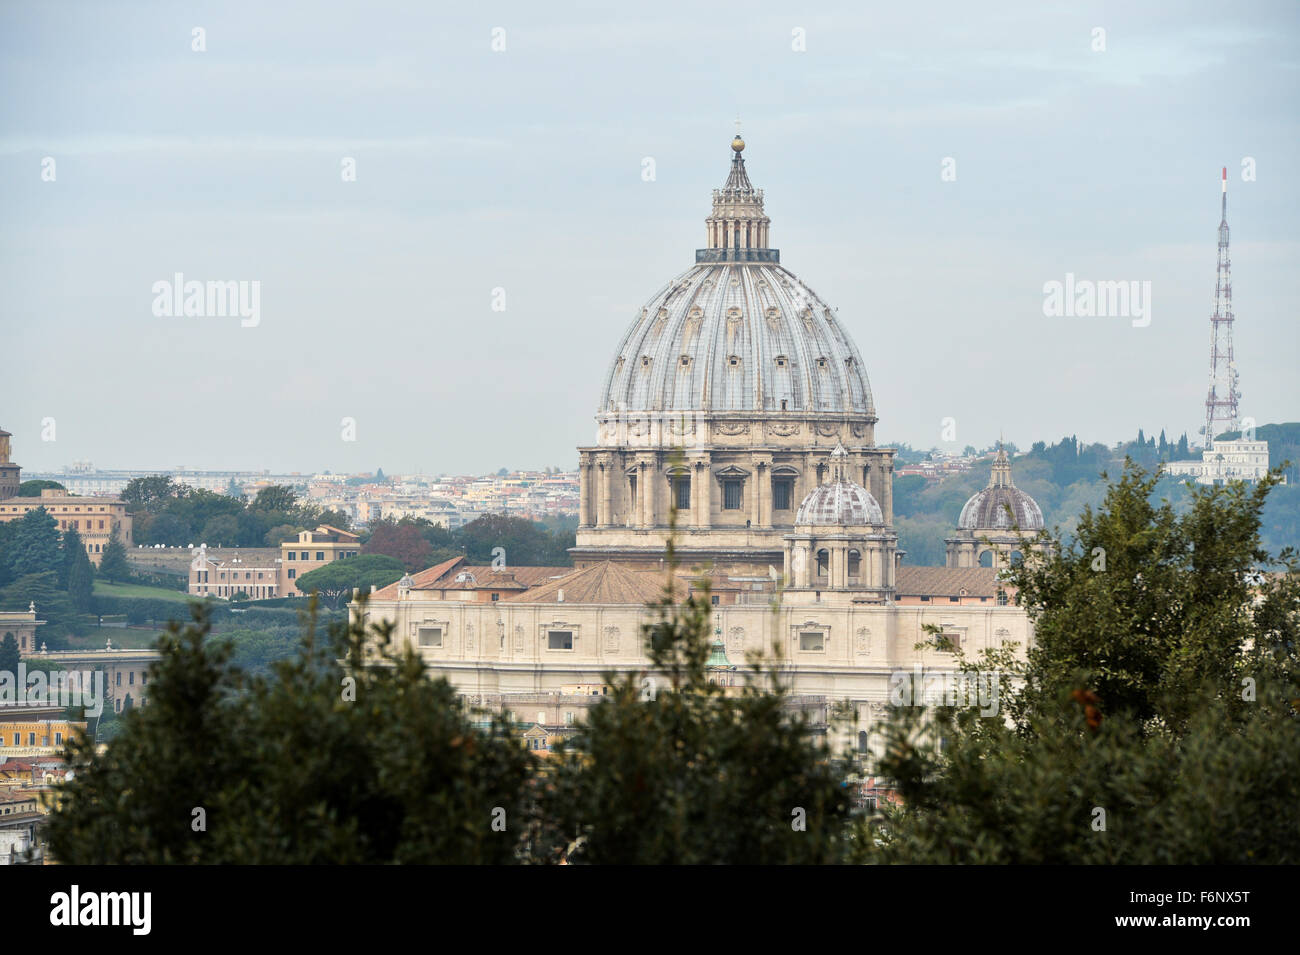 Rome, Italy. 18th Nov, 2015. Terrorist alarm in Rome. Strengthen security measures, on  november 18, 2015 Credit:  Silvia Lore'/Alamy Live News Stock Photo